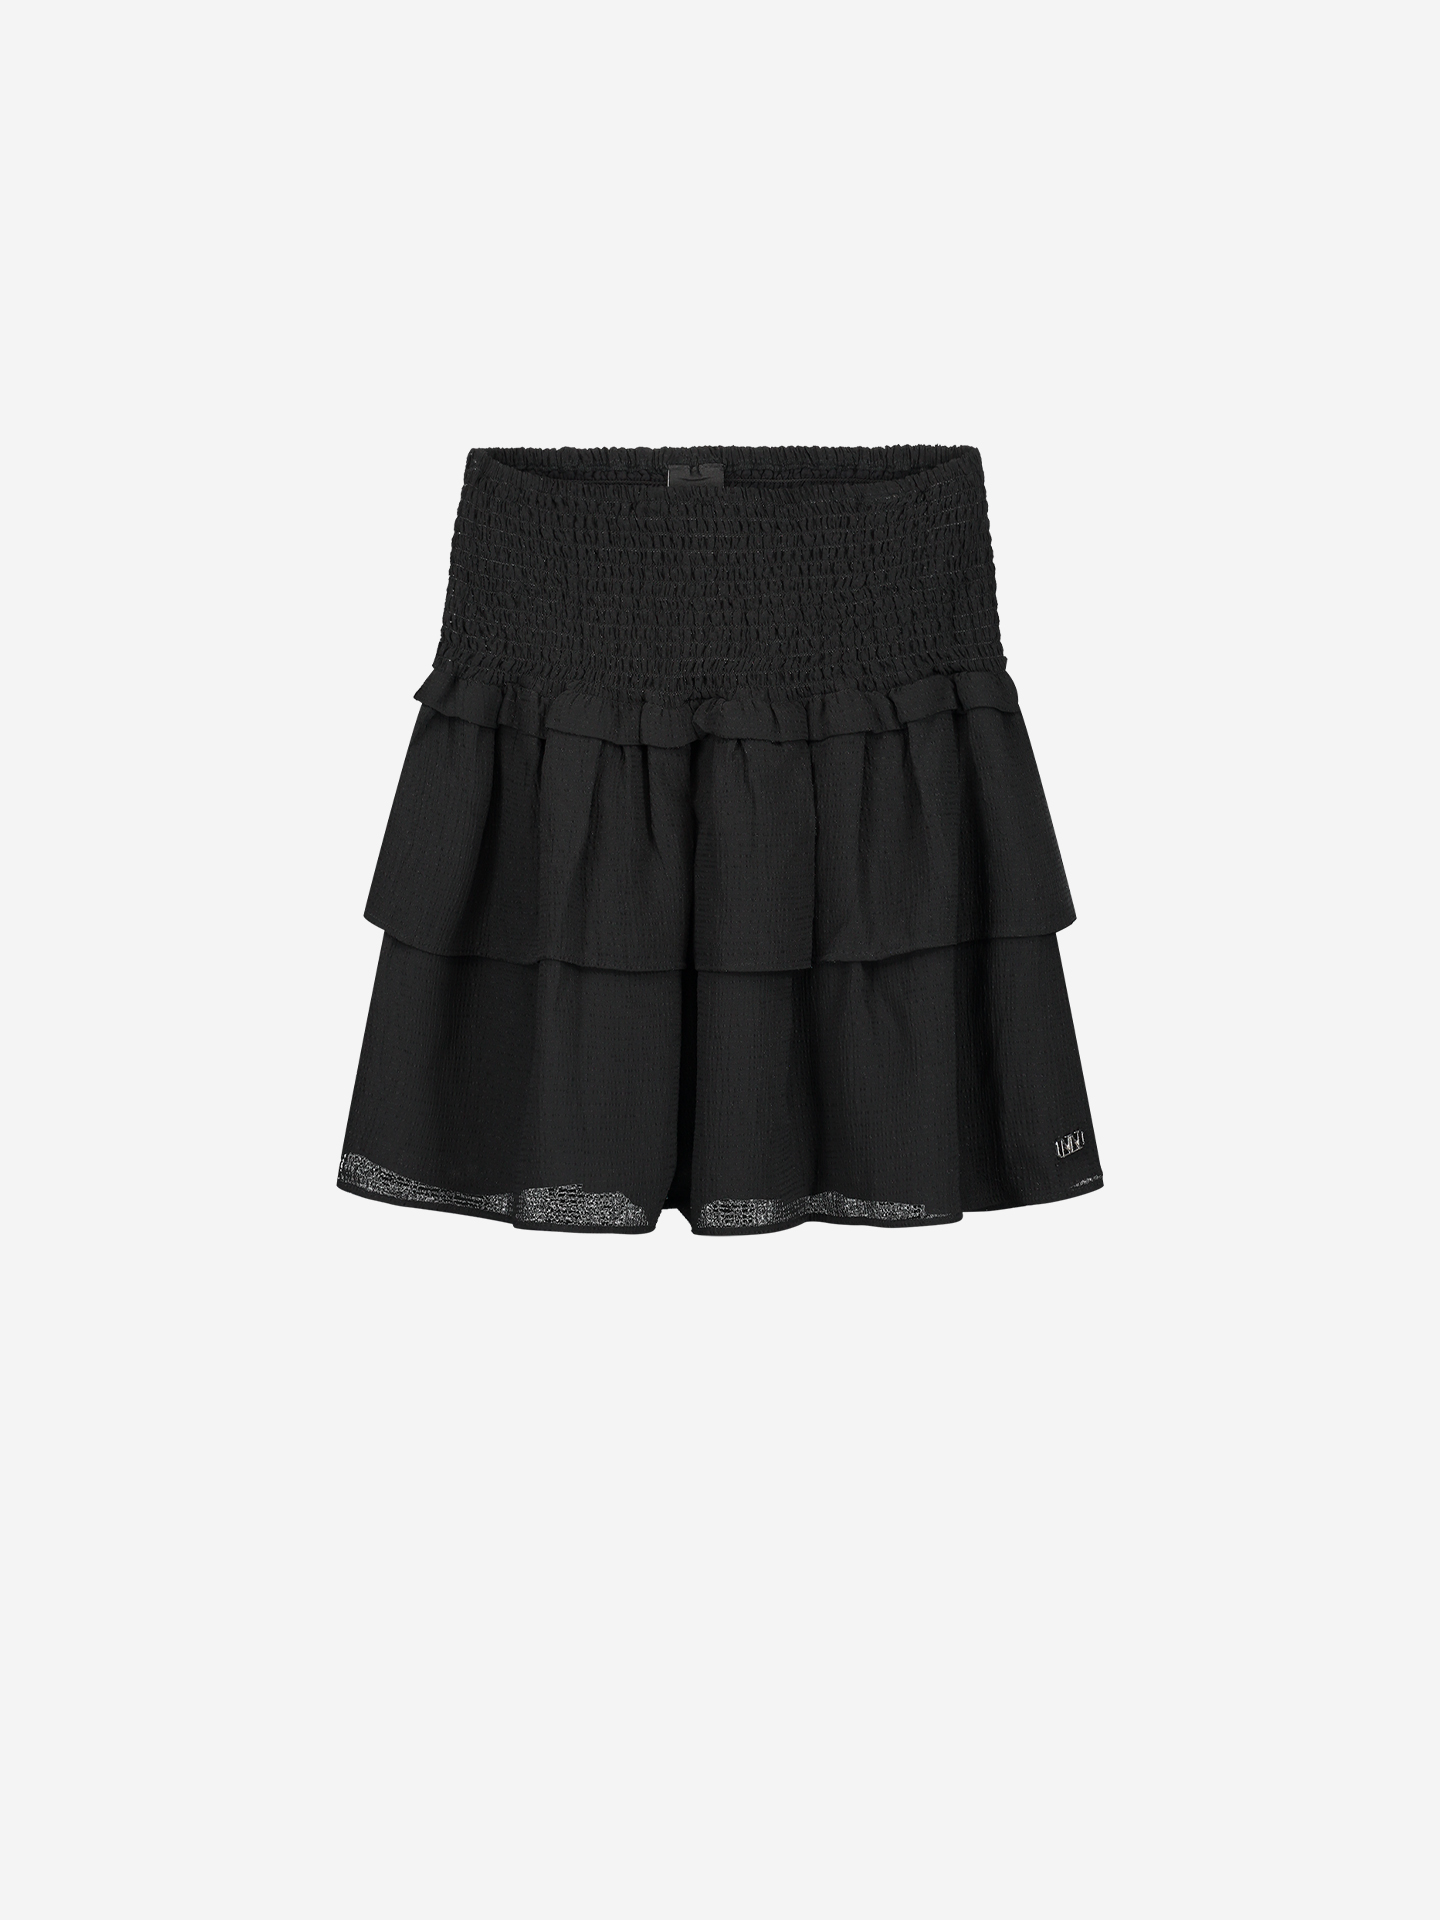 Skirt with ruffle